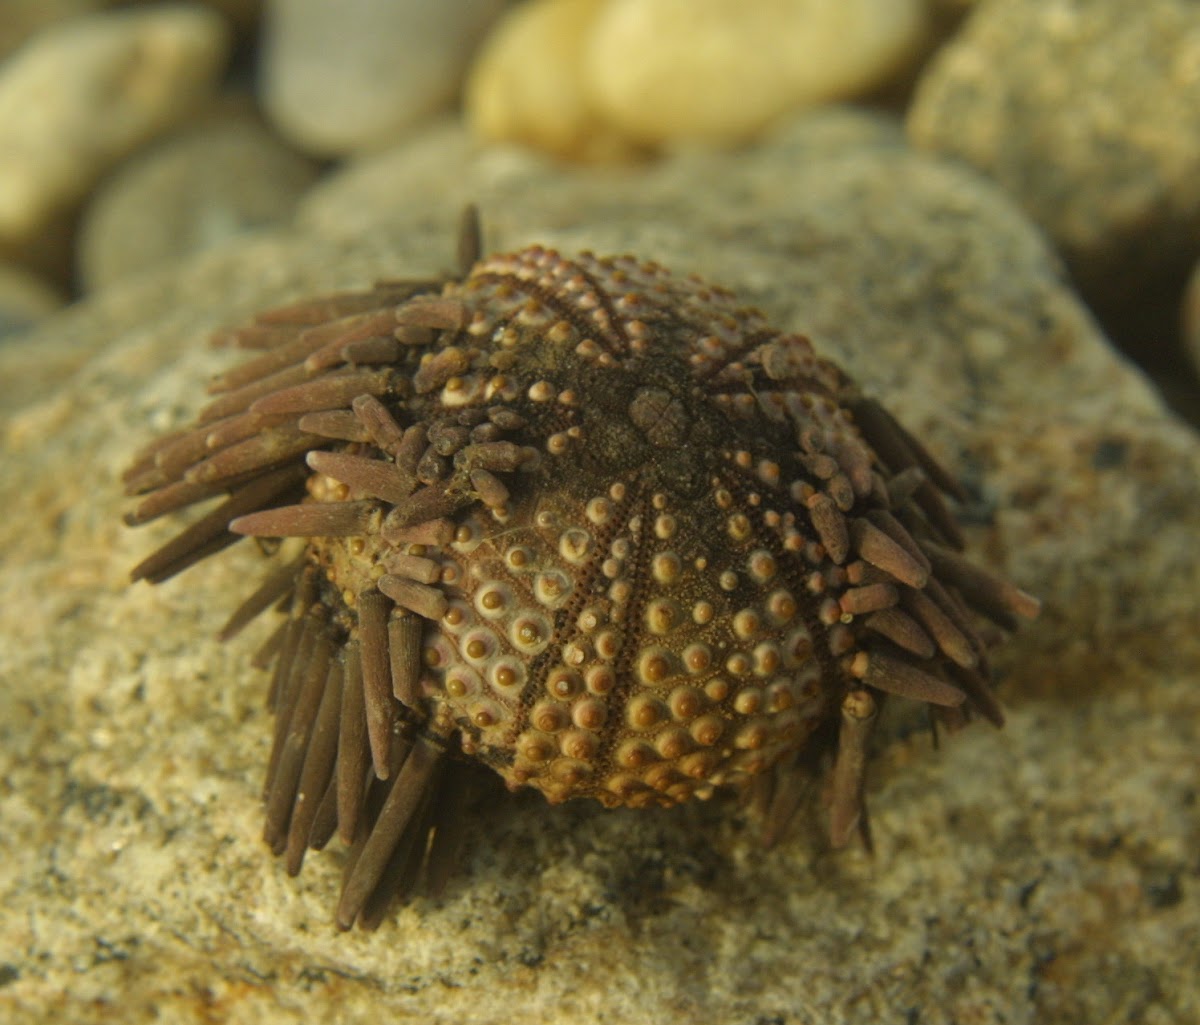 Purple-spined Sea Urchin